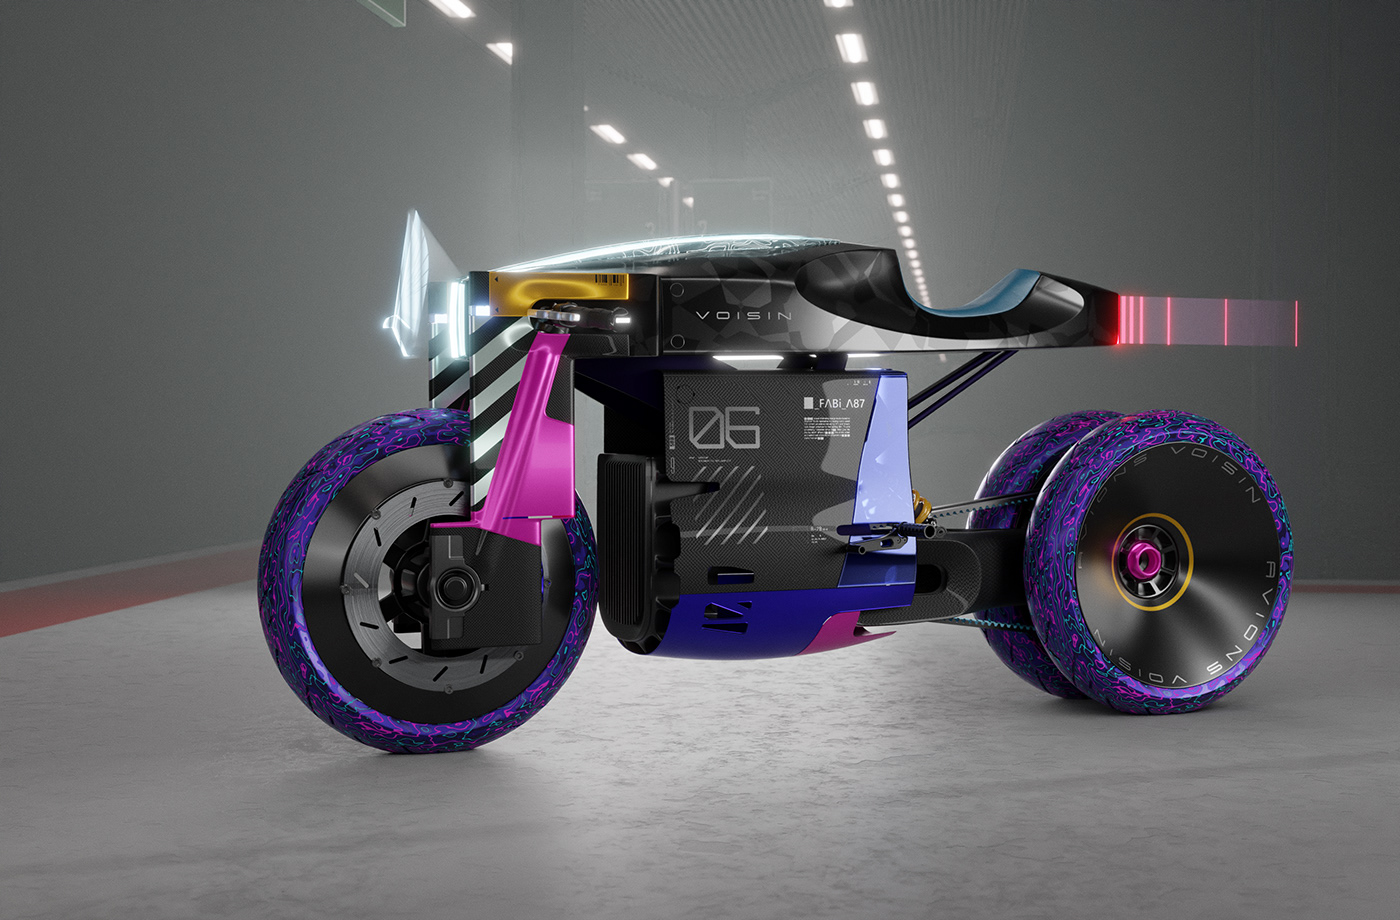 concept concept art Cyberpunk design industrial design  motorcycle Automotive design